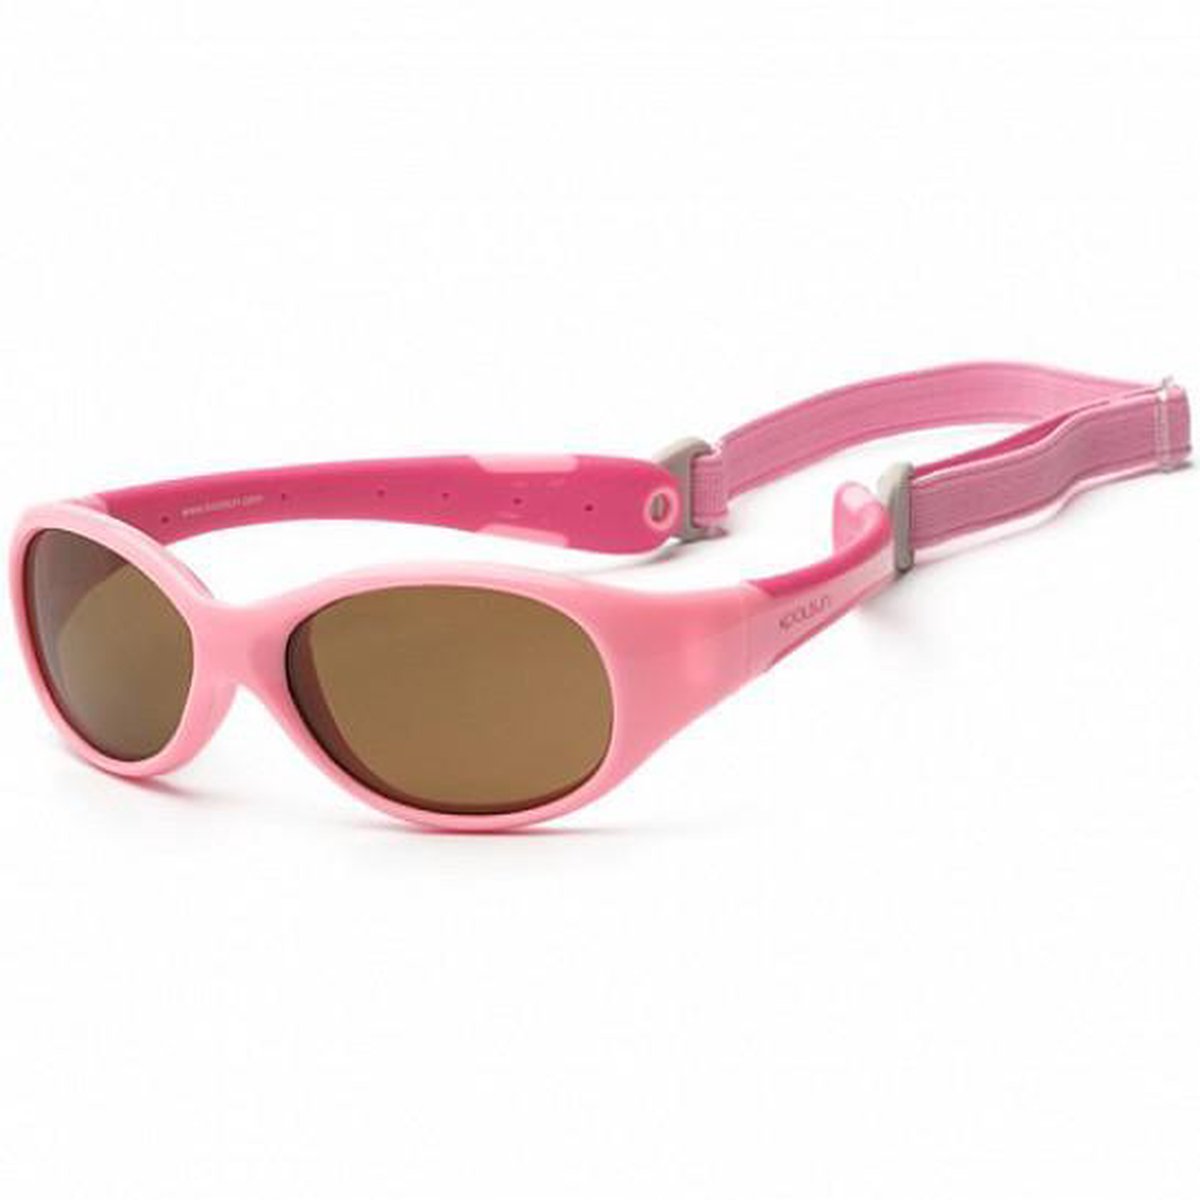 KOOLSUN - Flex - baby zonnebril - Roze Sorbet - 0-3 jaar - UV400 Categorie 3